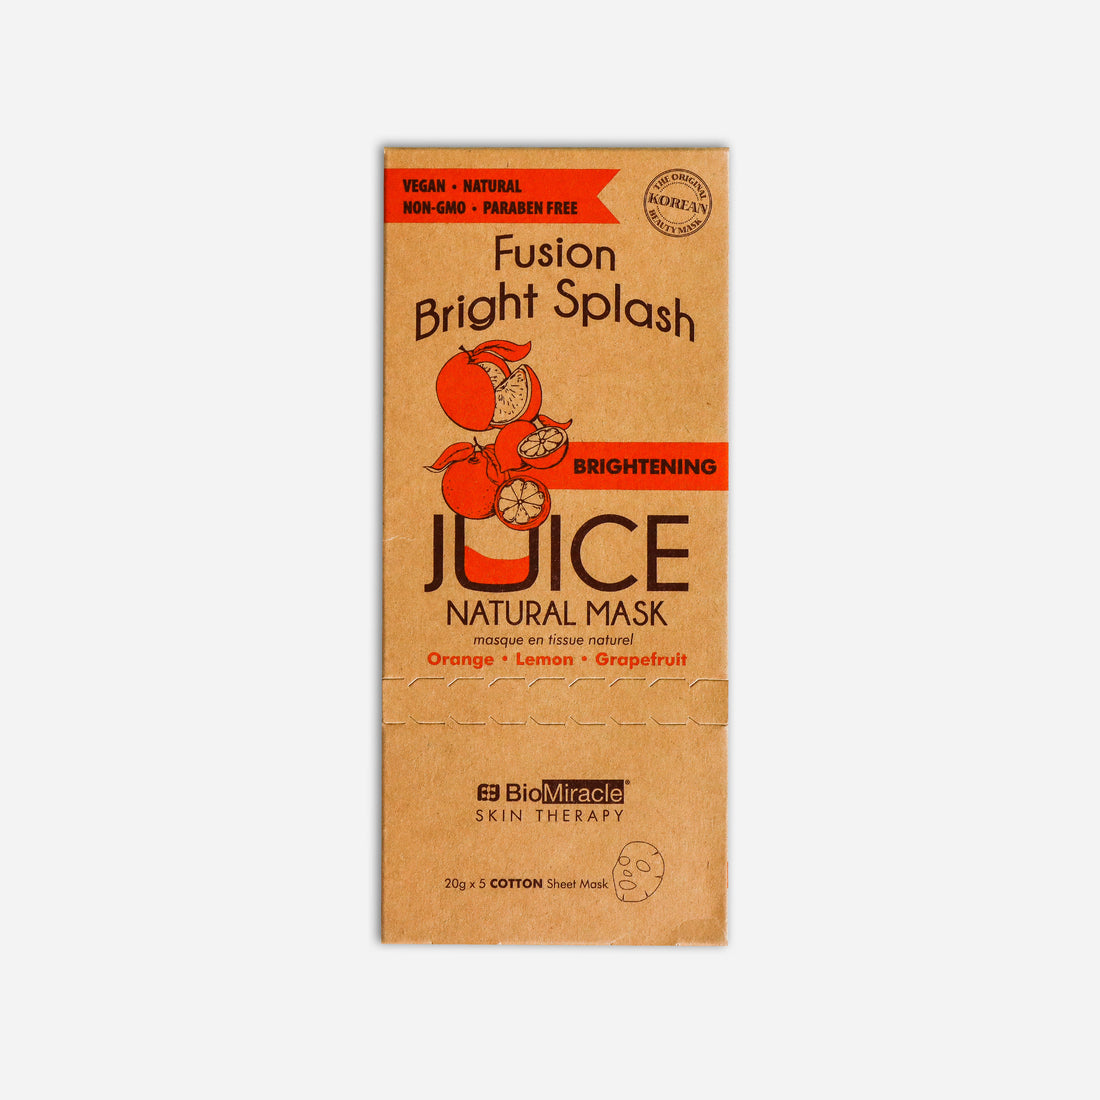 Fusion Bright Splash Brightening Juice Natural Mask 5 Pack